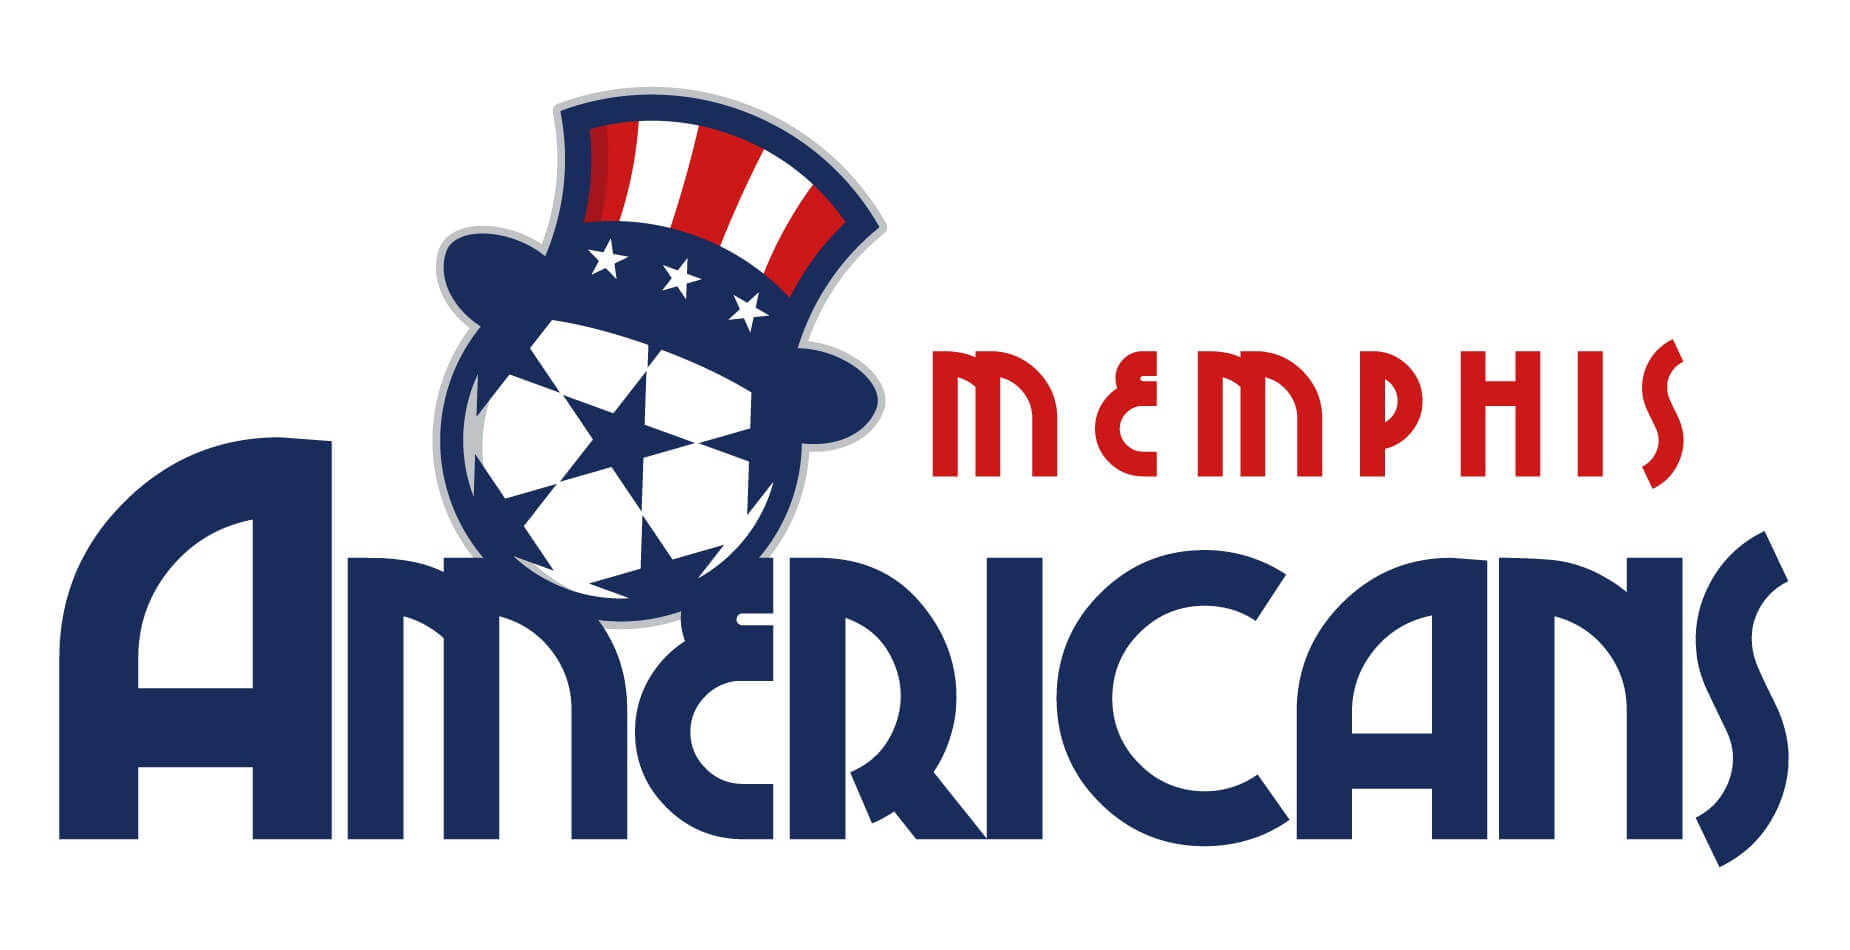 Americans women win NISL soccer title, men are second